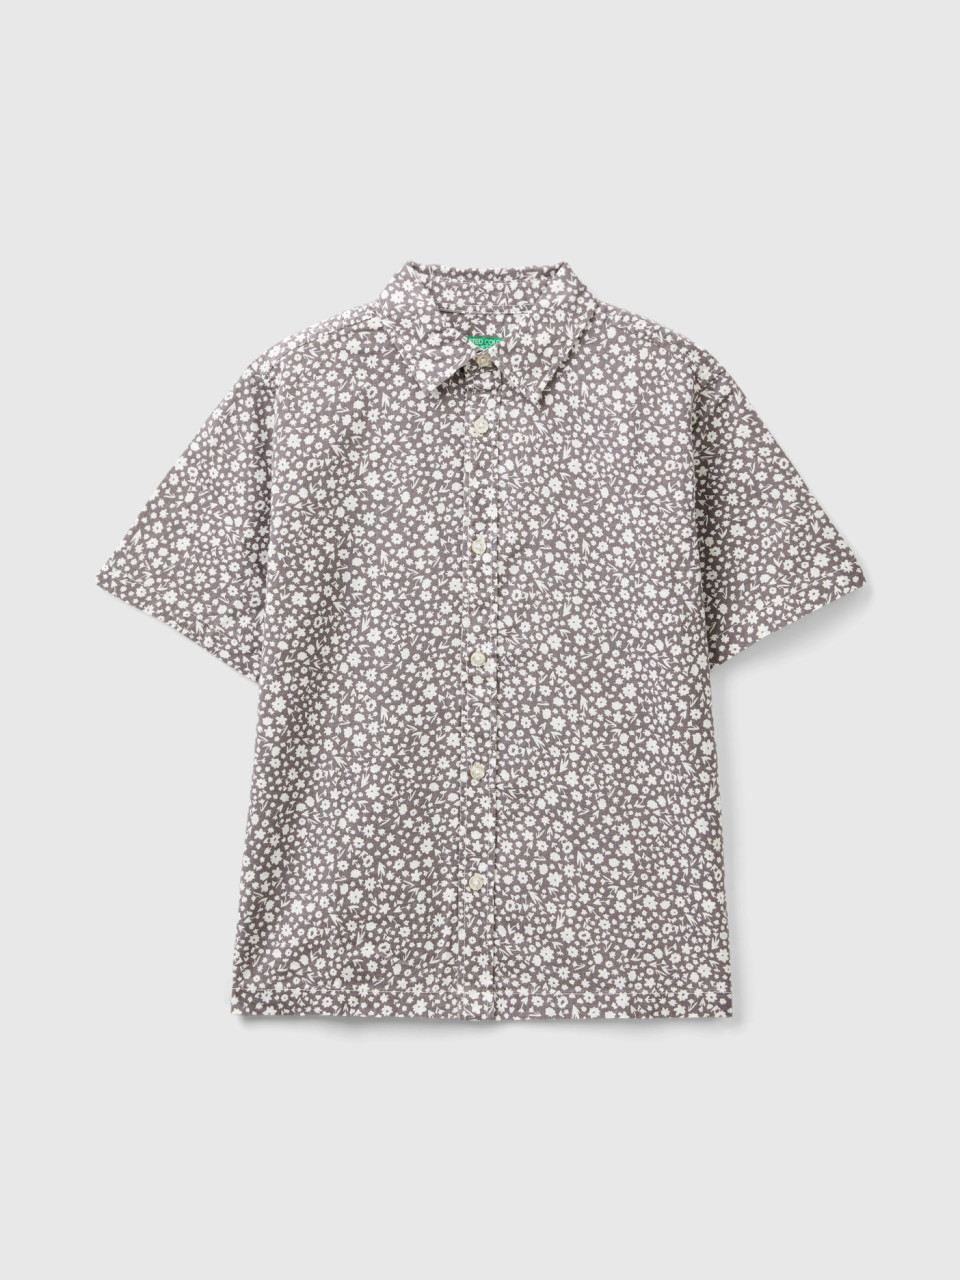 Benetton, Shirt With Floral Print, Dark Gray, Kids